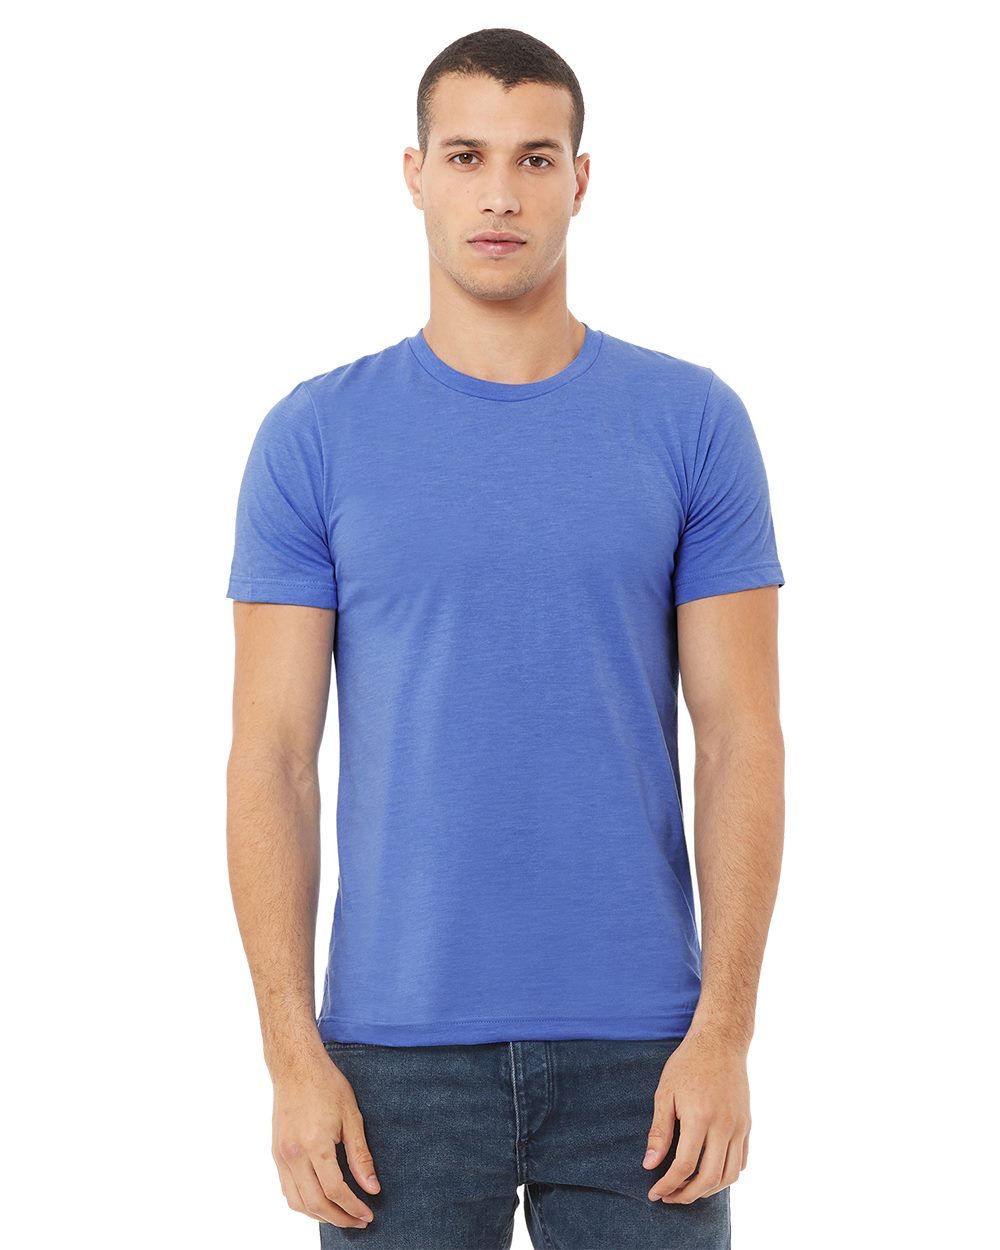 RBA Design Relaxed Unisex T-Shirt - DARK COLORS